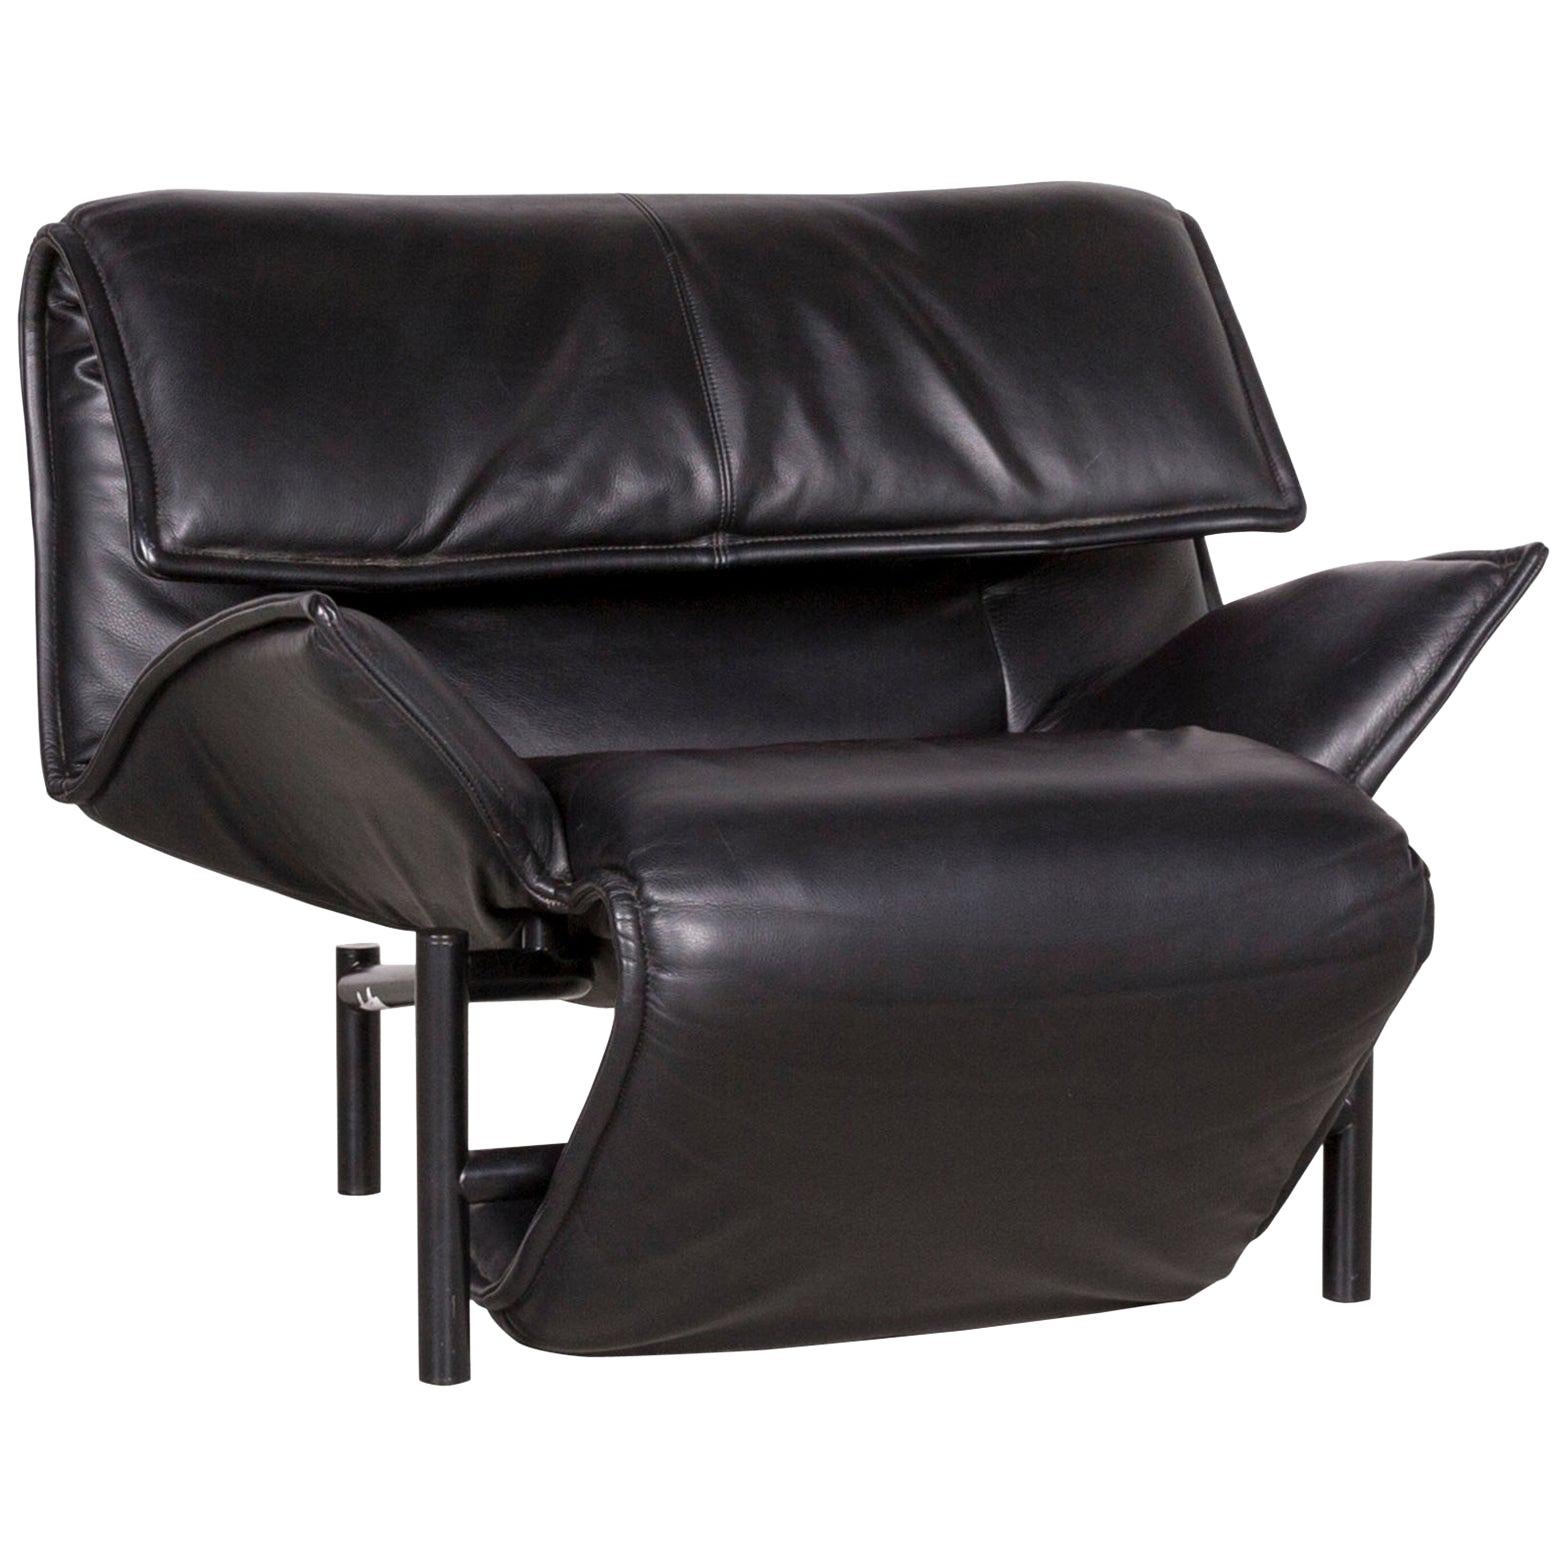 Cassina Veranda Designer Leather Armchair in Black Recliner Function For Sale